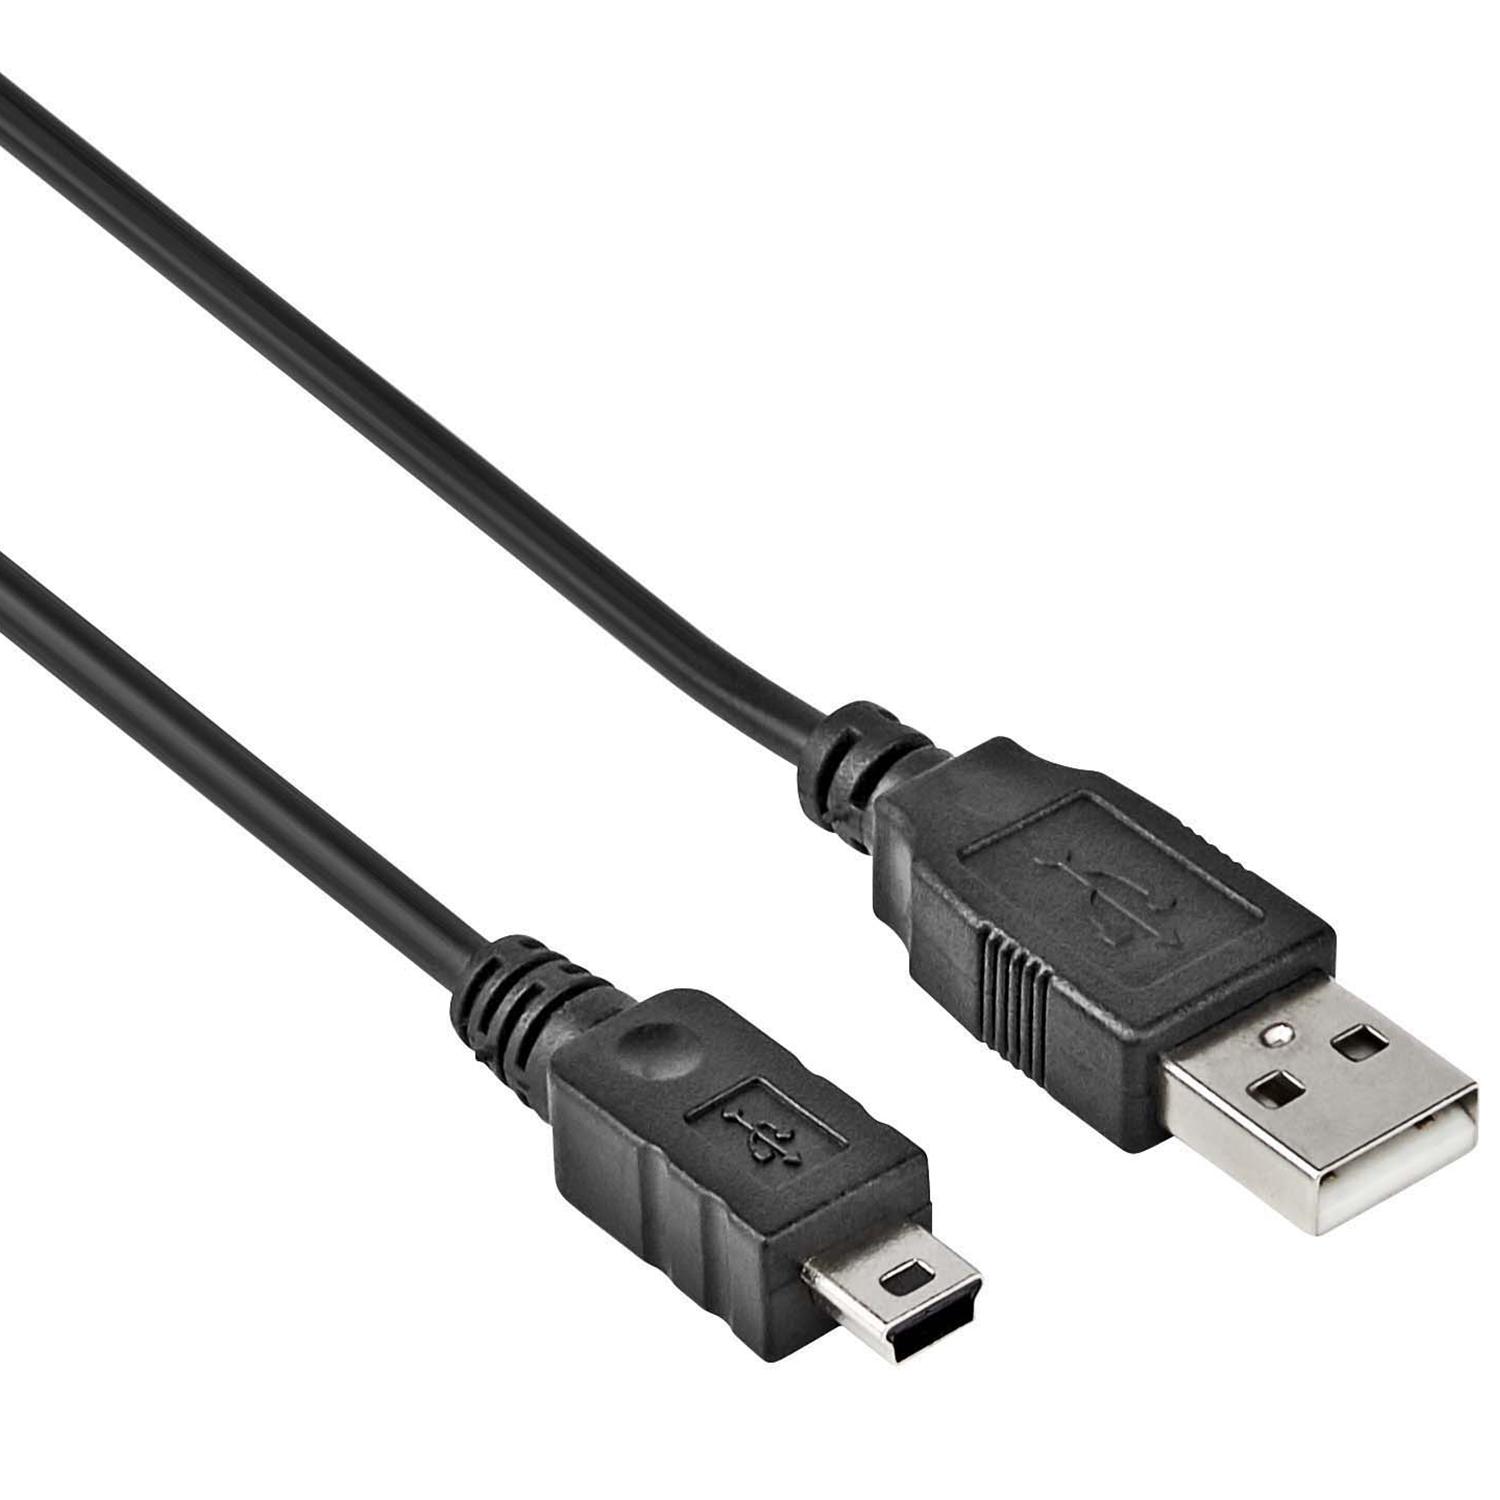 USB 2.0 Mini Kabel